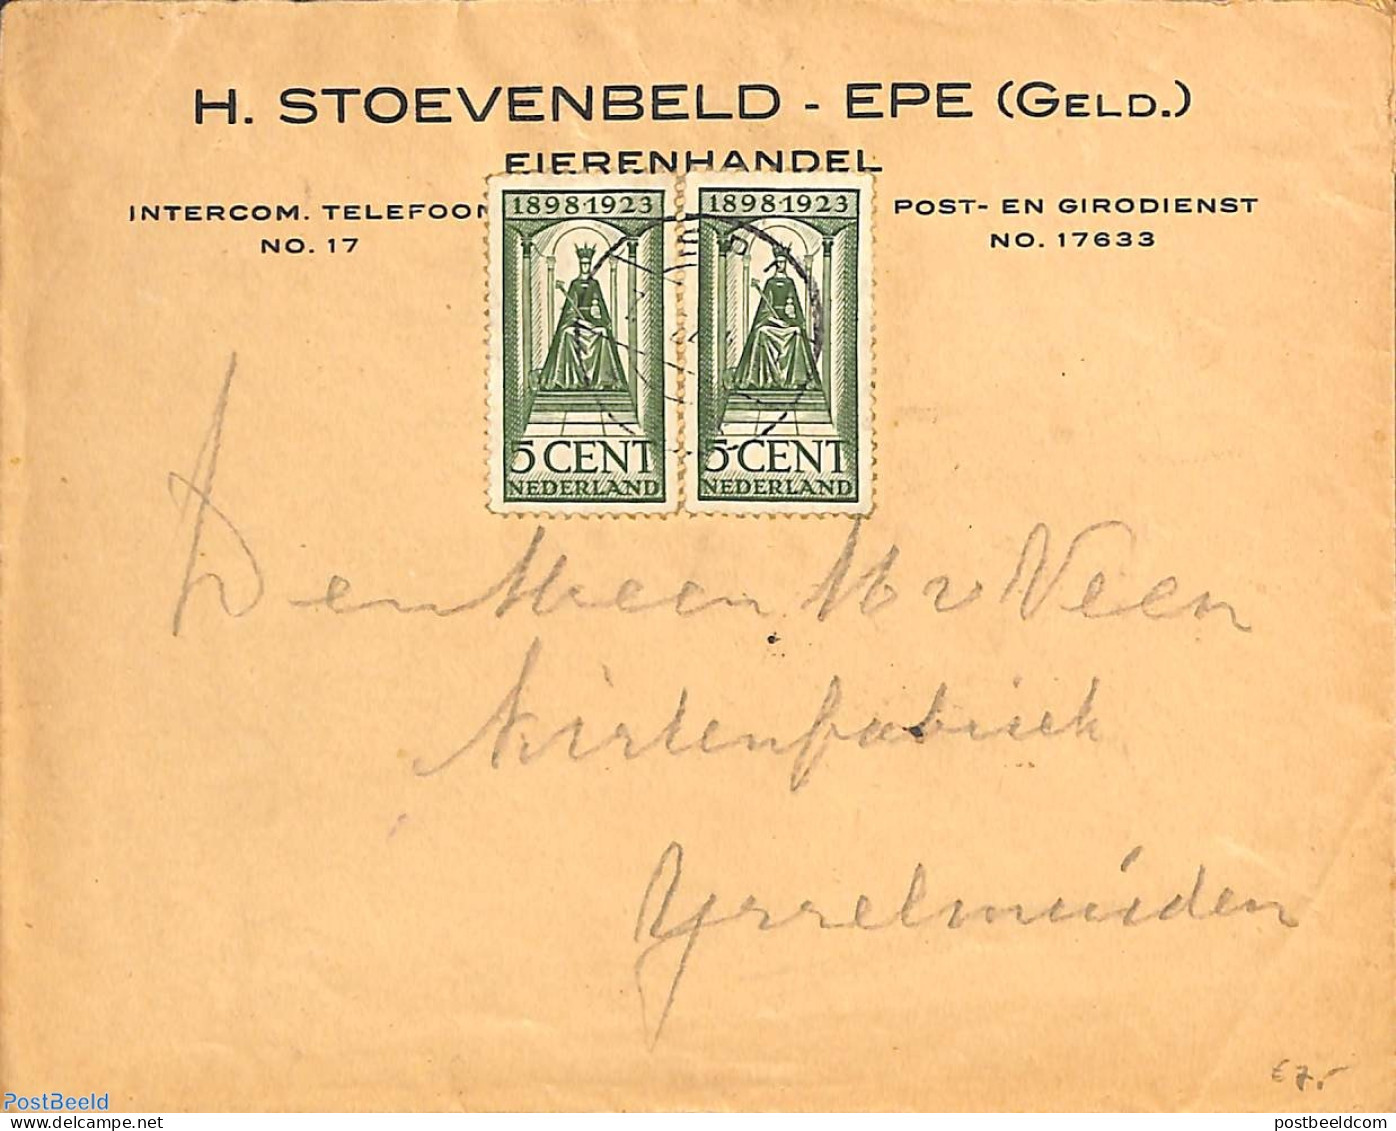 Netherlands 1923 Letter With Jubilee Stamps, Perf 11:12, Postal History - Briefe U. Dokumente